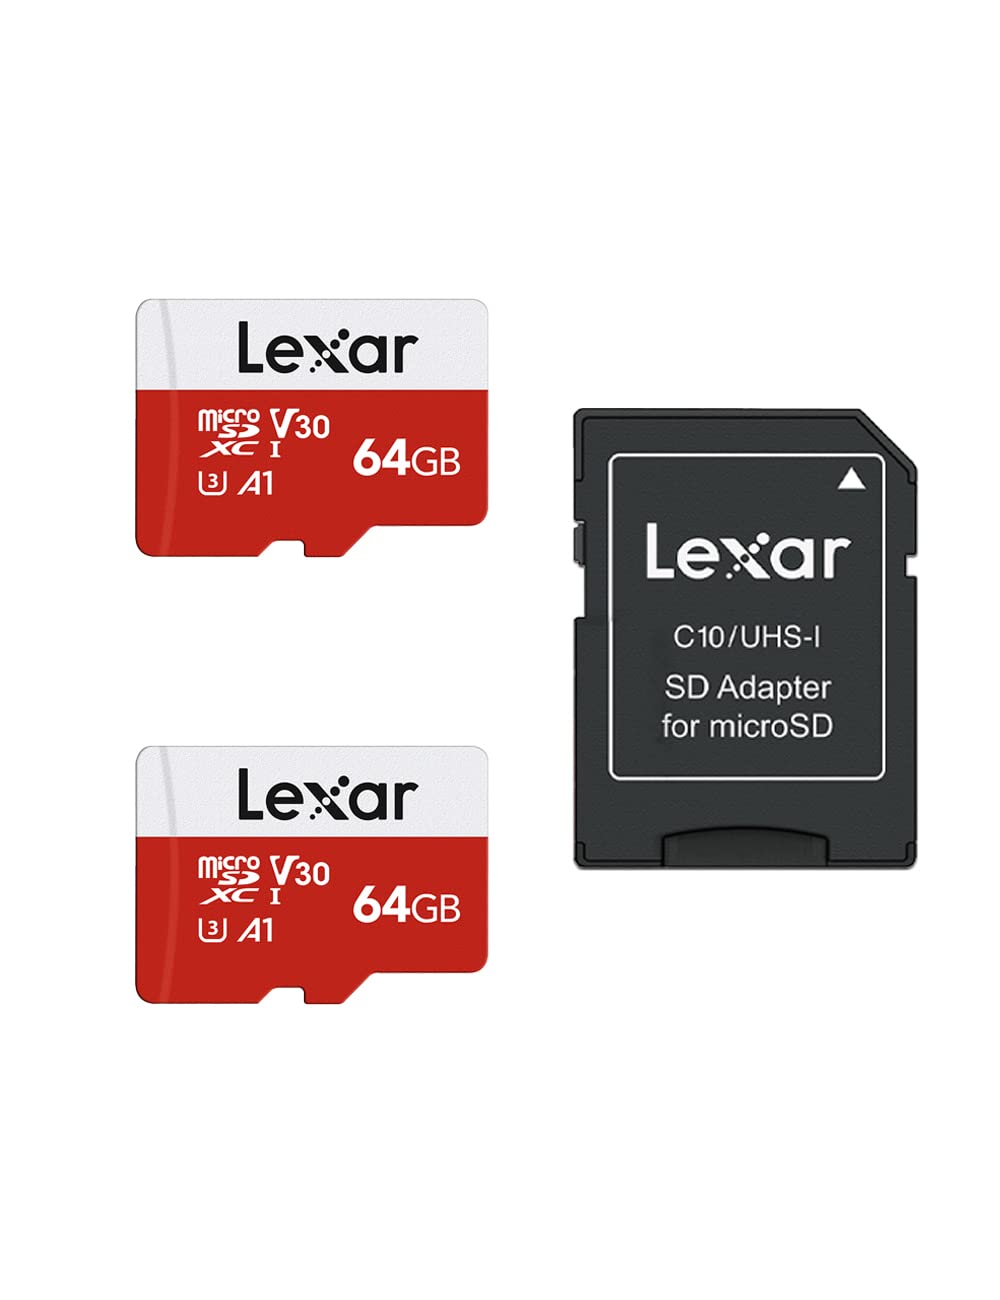 64GB MicroSD Class 10 Memory Card